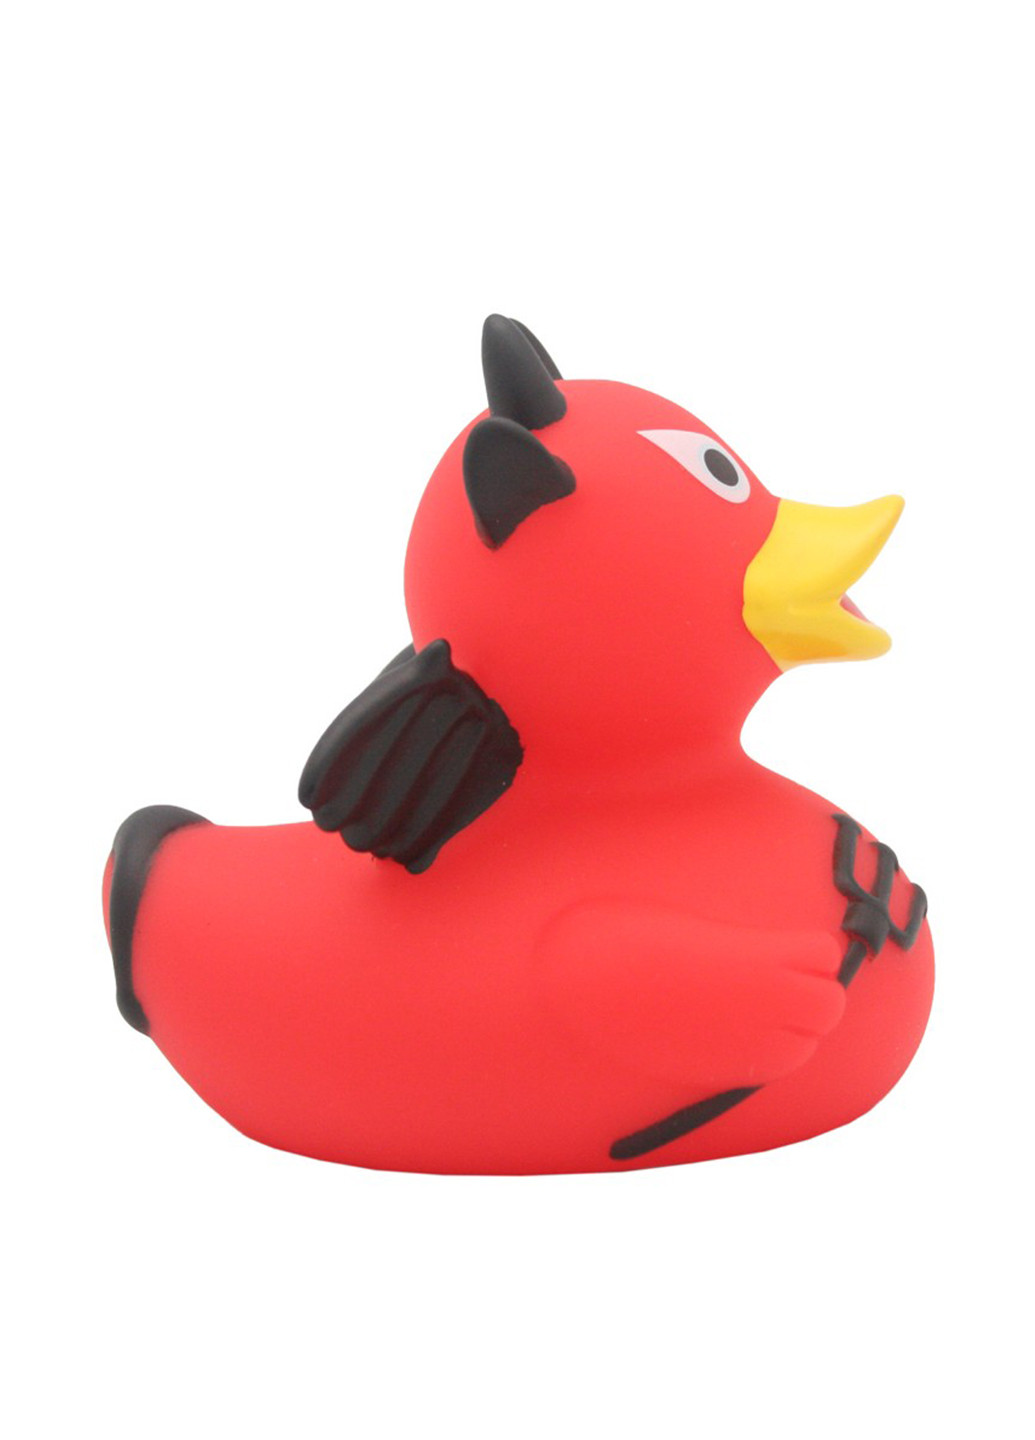 Игрушка для купания Утка Черт, 8,5x8,5x7,5 см Funny Ducks (250618774)